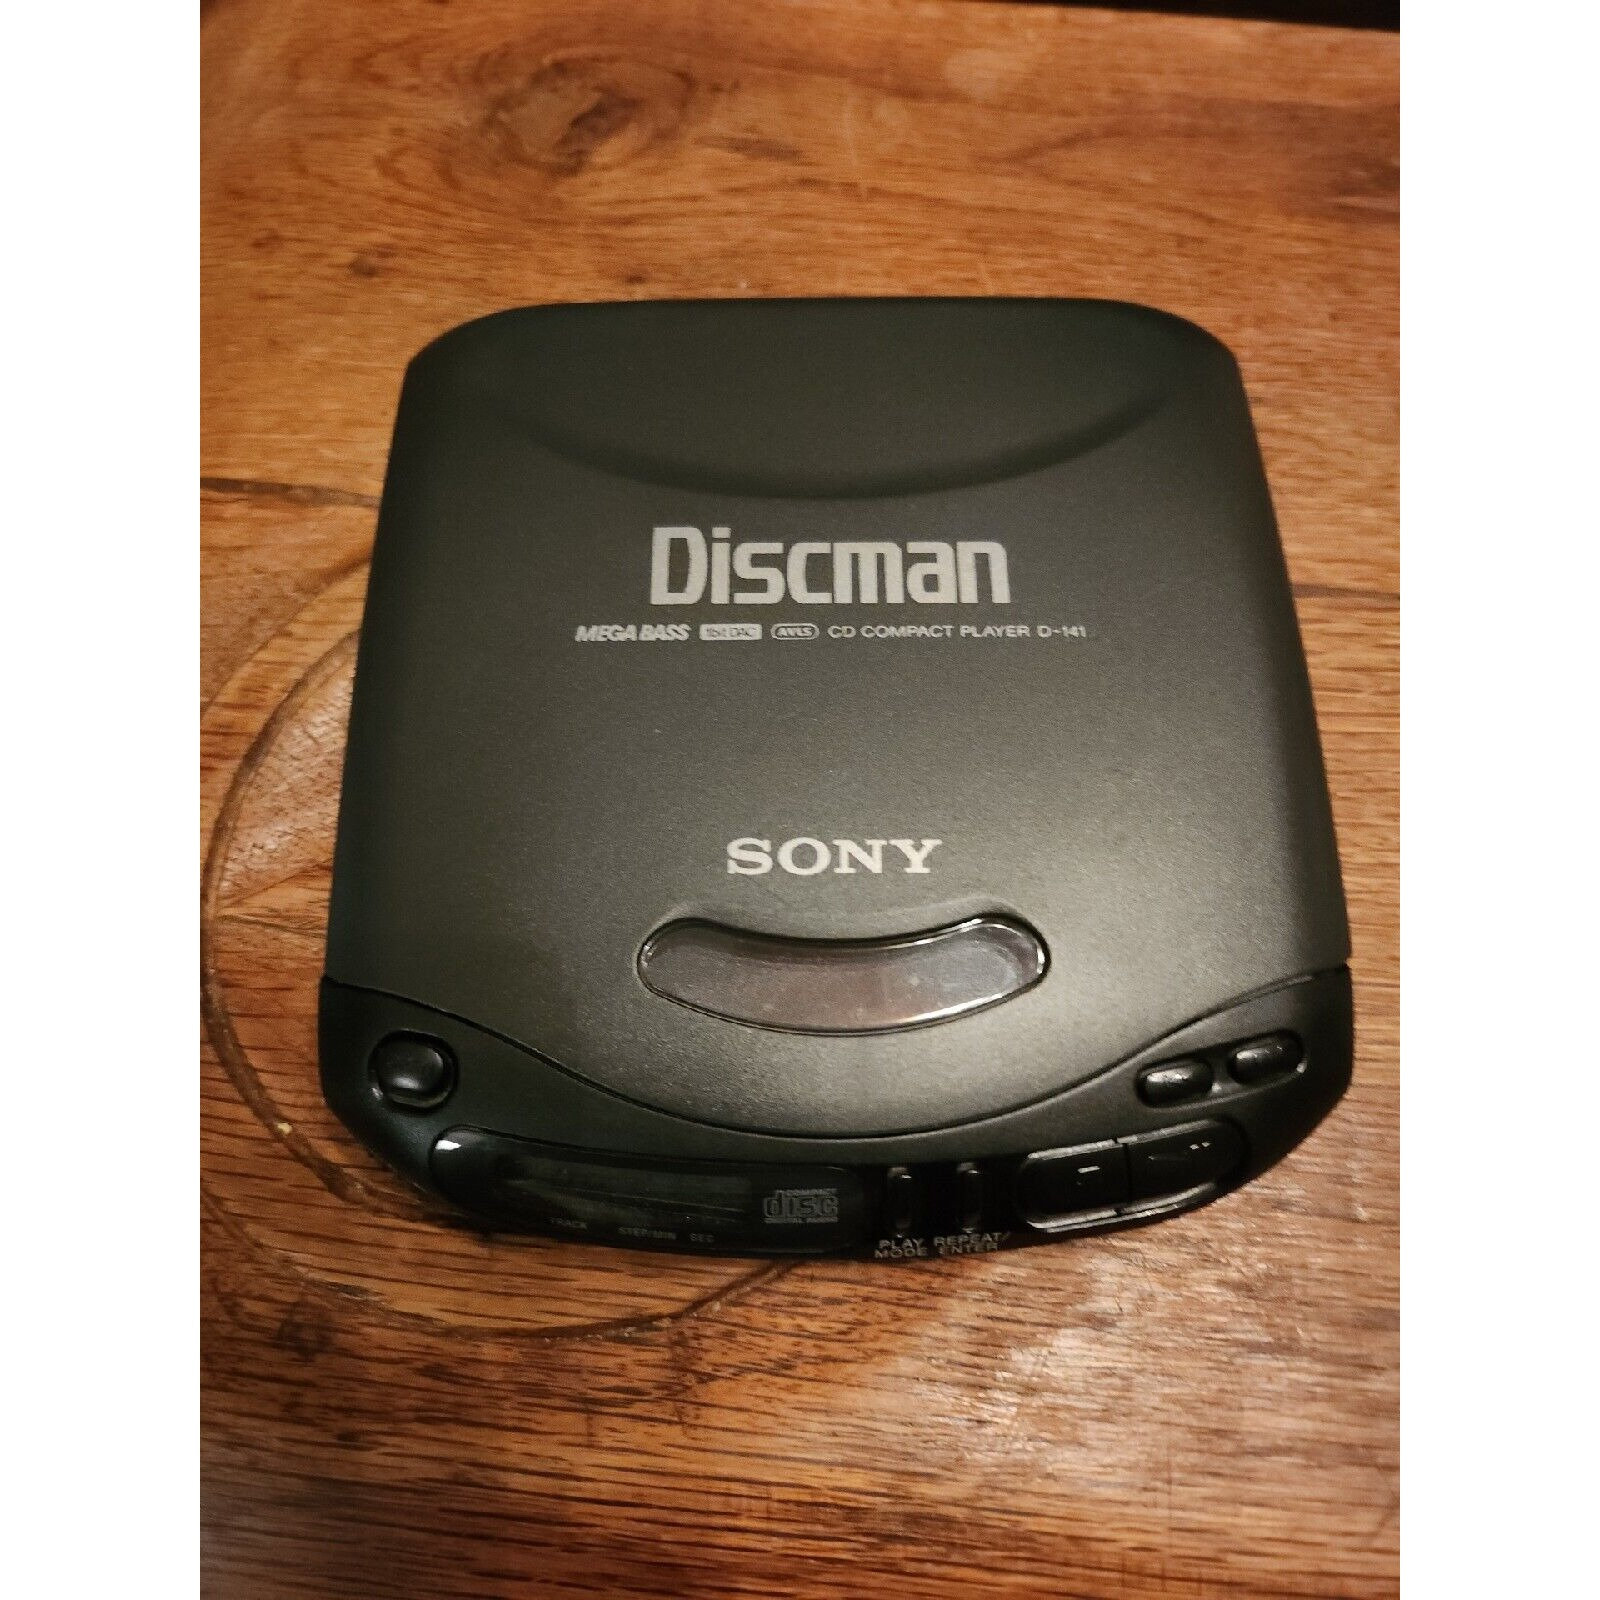 sony discman